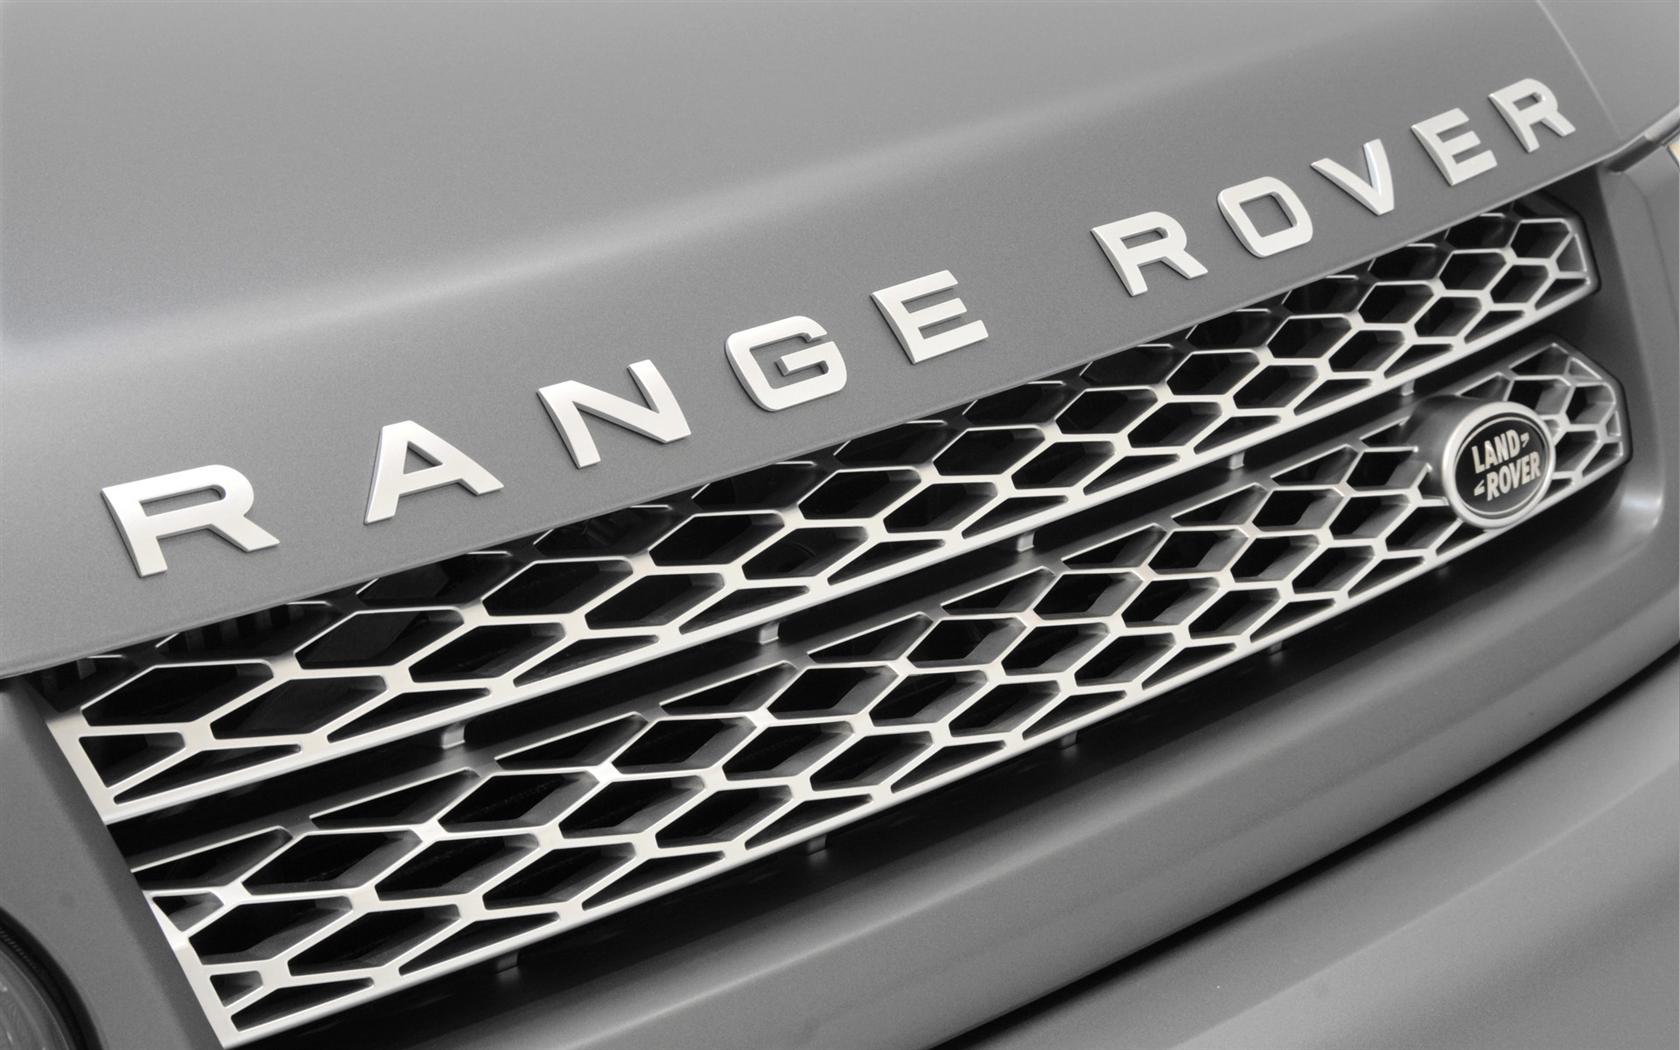 2011 Startech Range Rover Sport